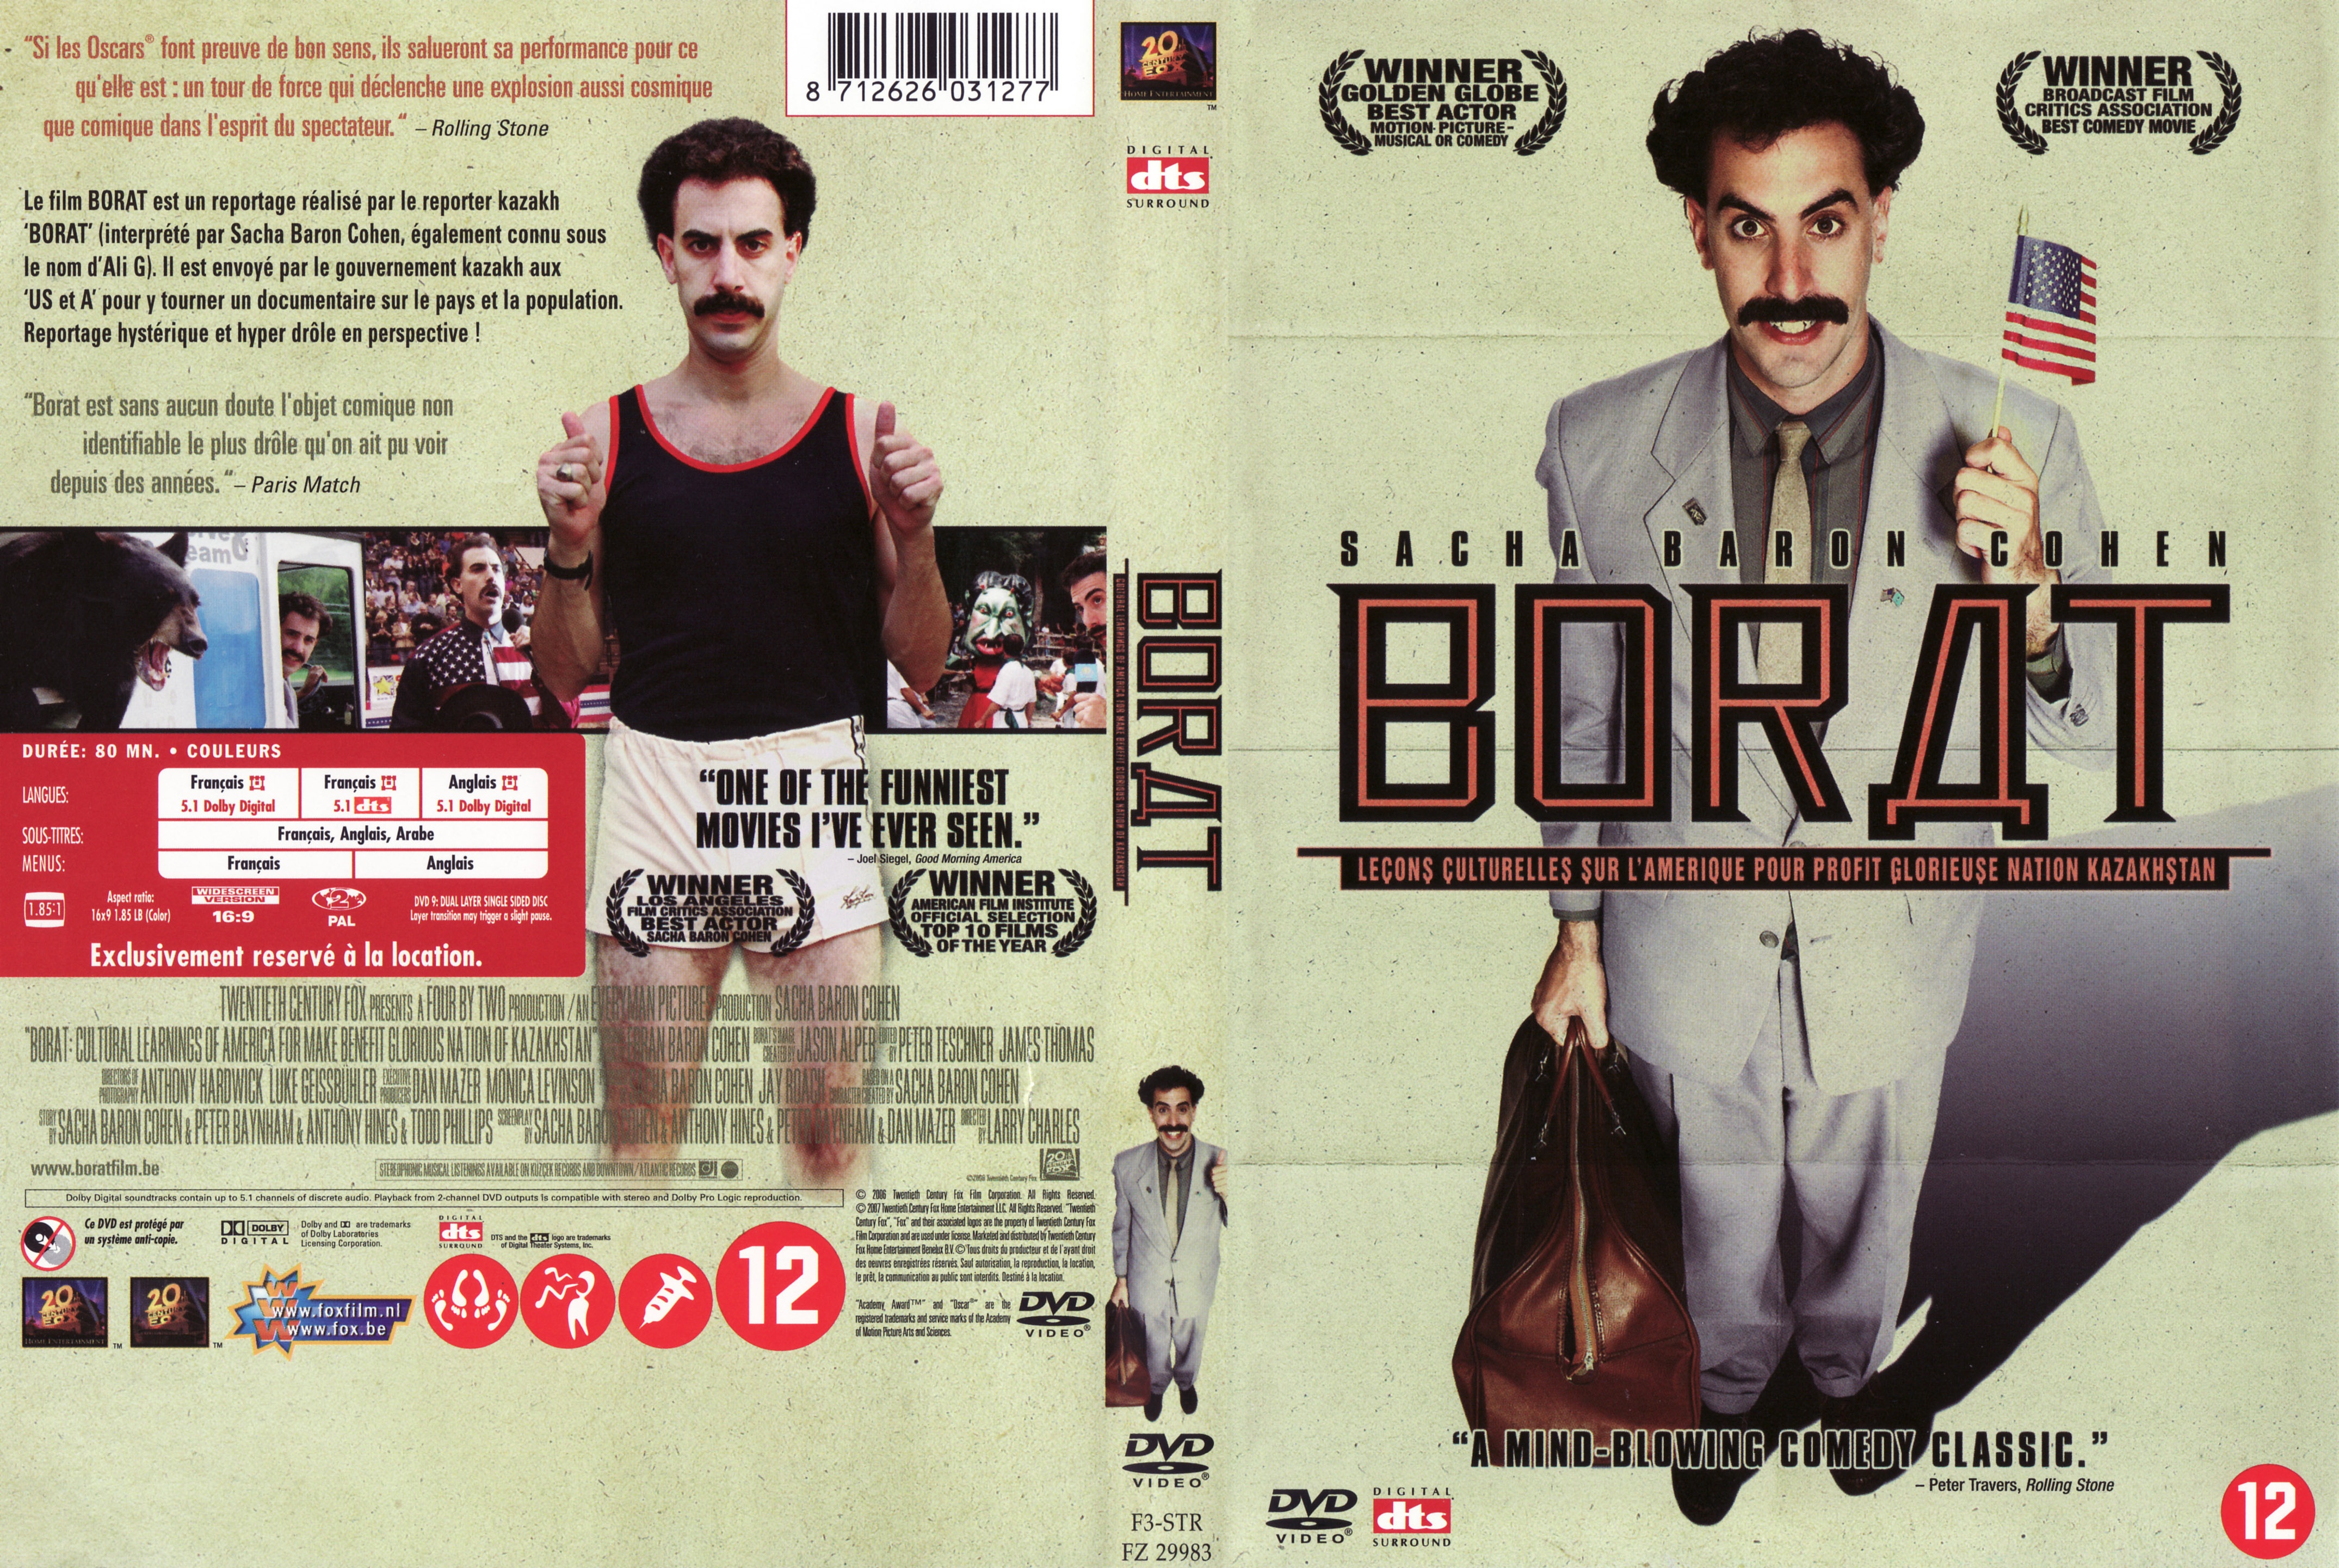 Jaquette DVD Borat v2